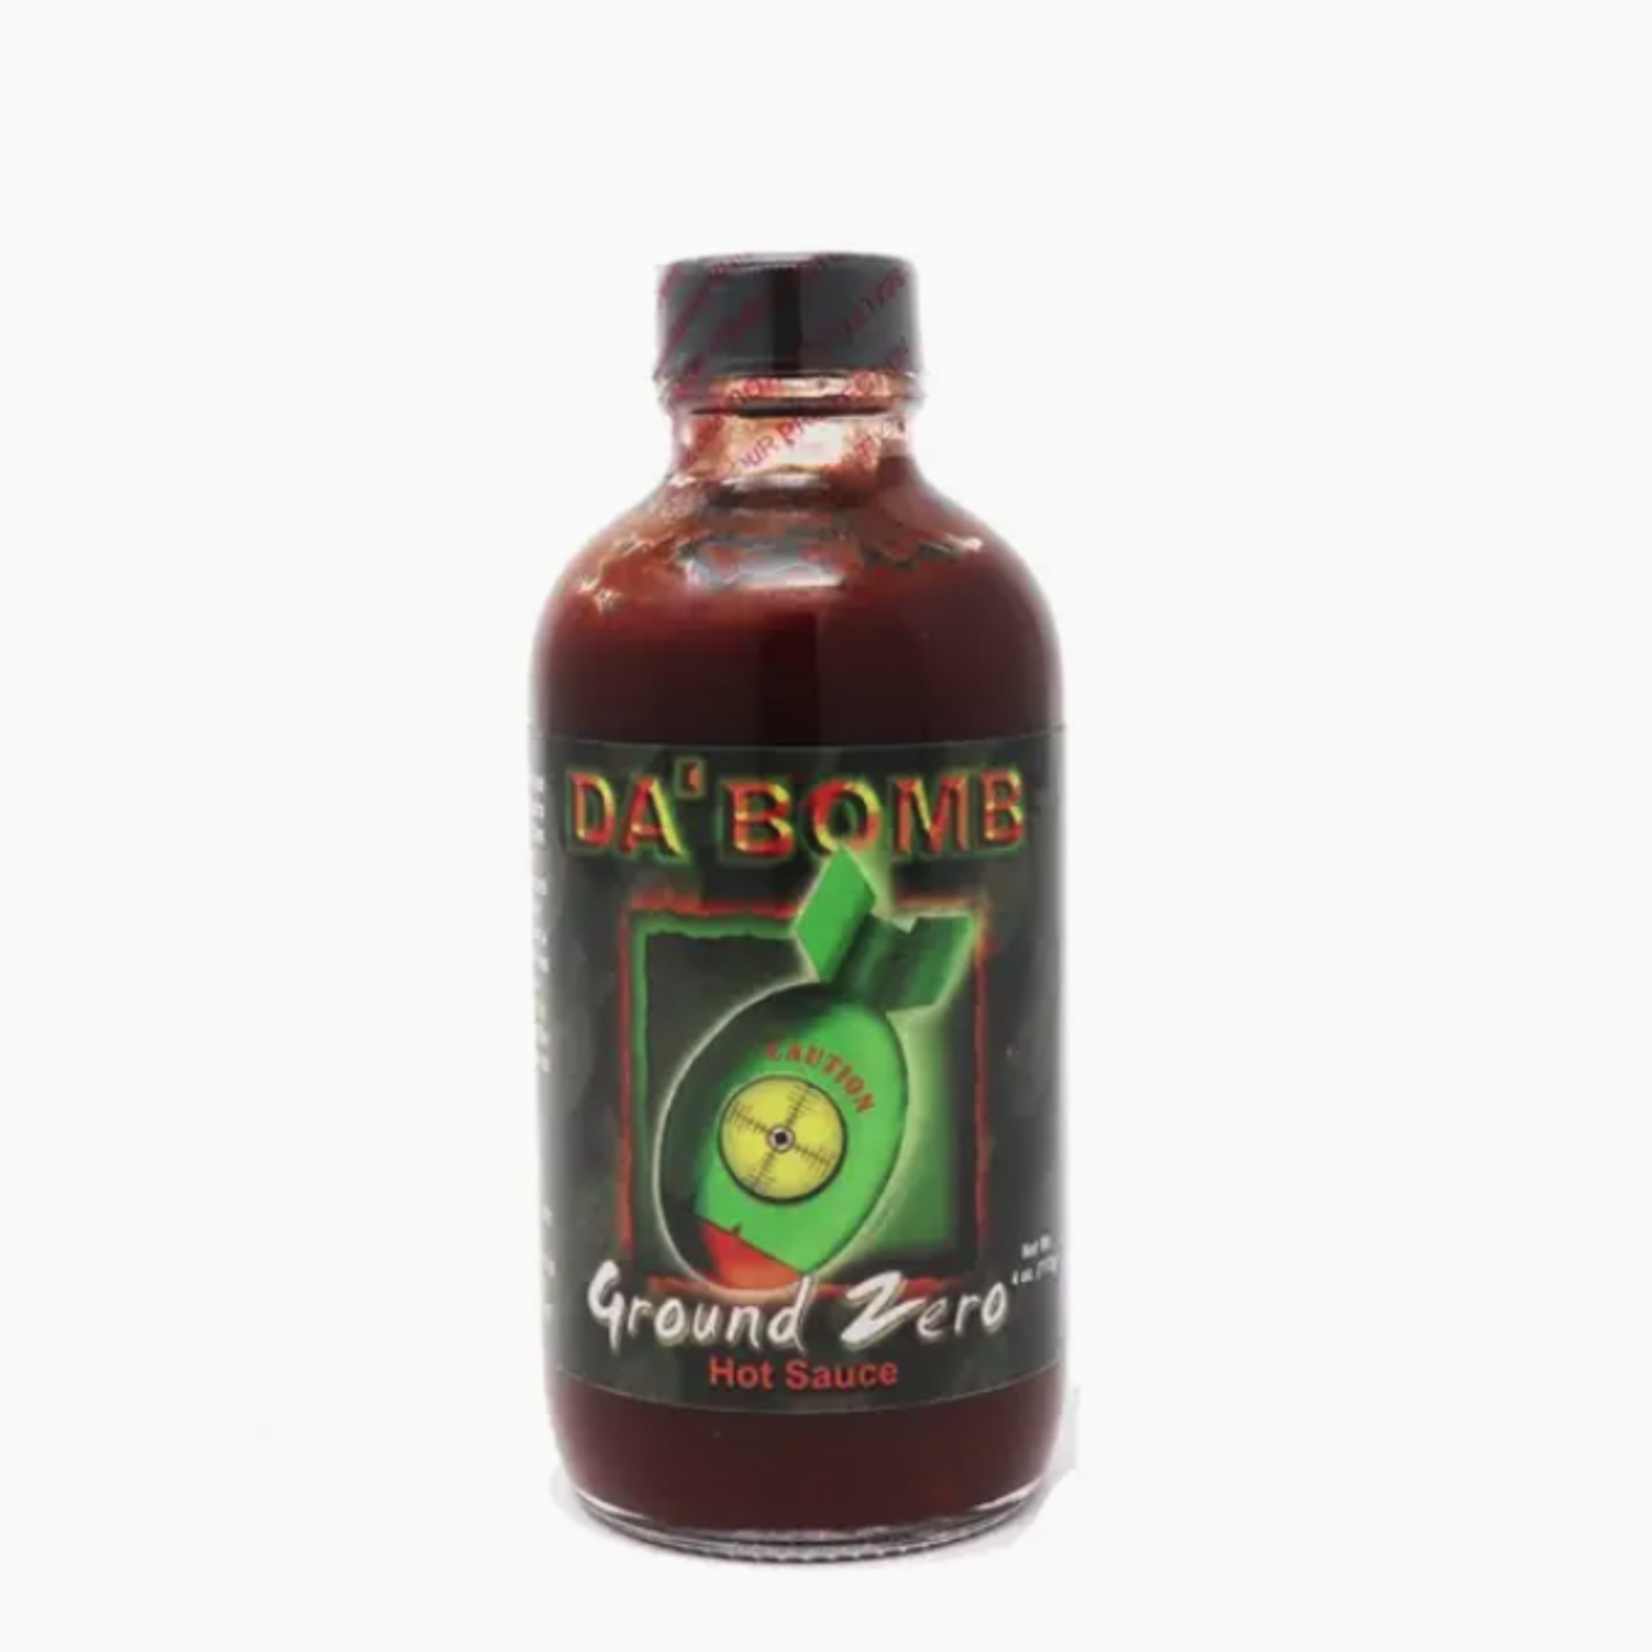 Spicin Foods Da'bomb Ground Zero Hot Sauce